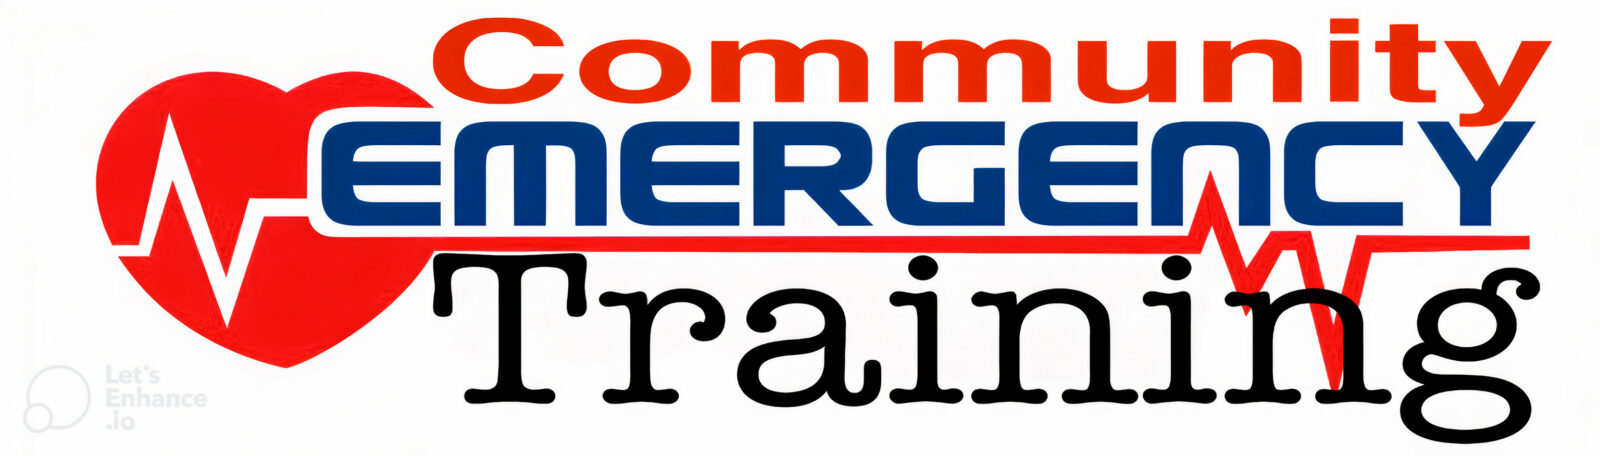 Community Emergency Training Logo